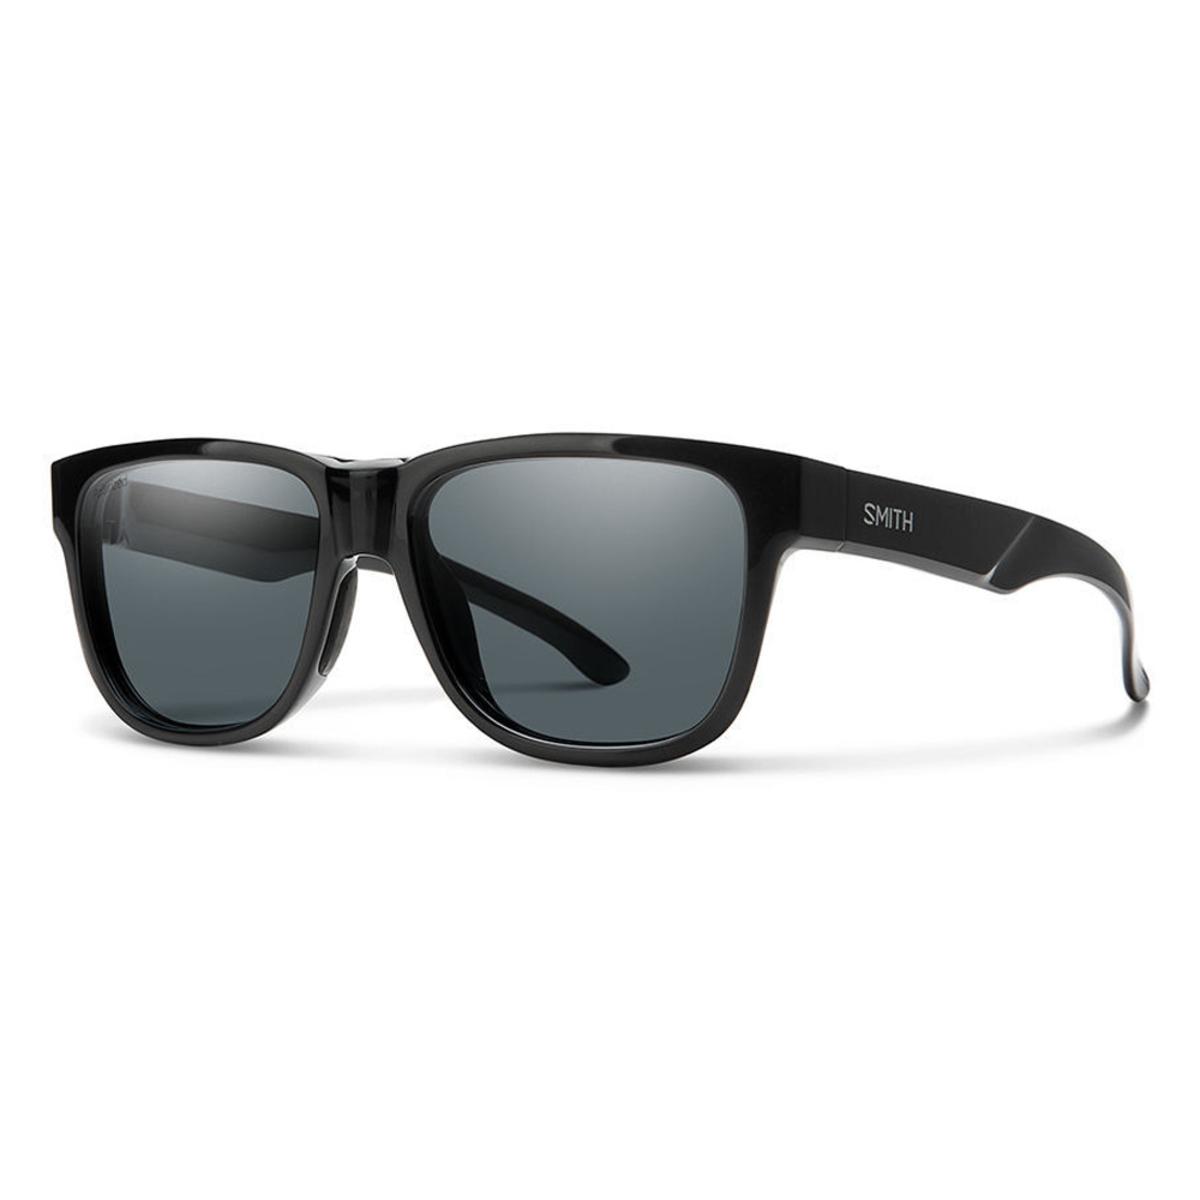 Smith Optics Lowdown Slim 2 Sunglasses Carbonic Polarized Gray - Black Frame